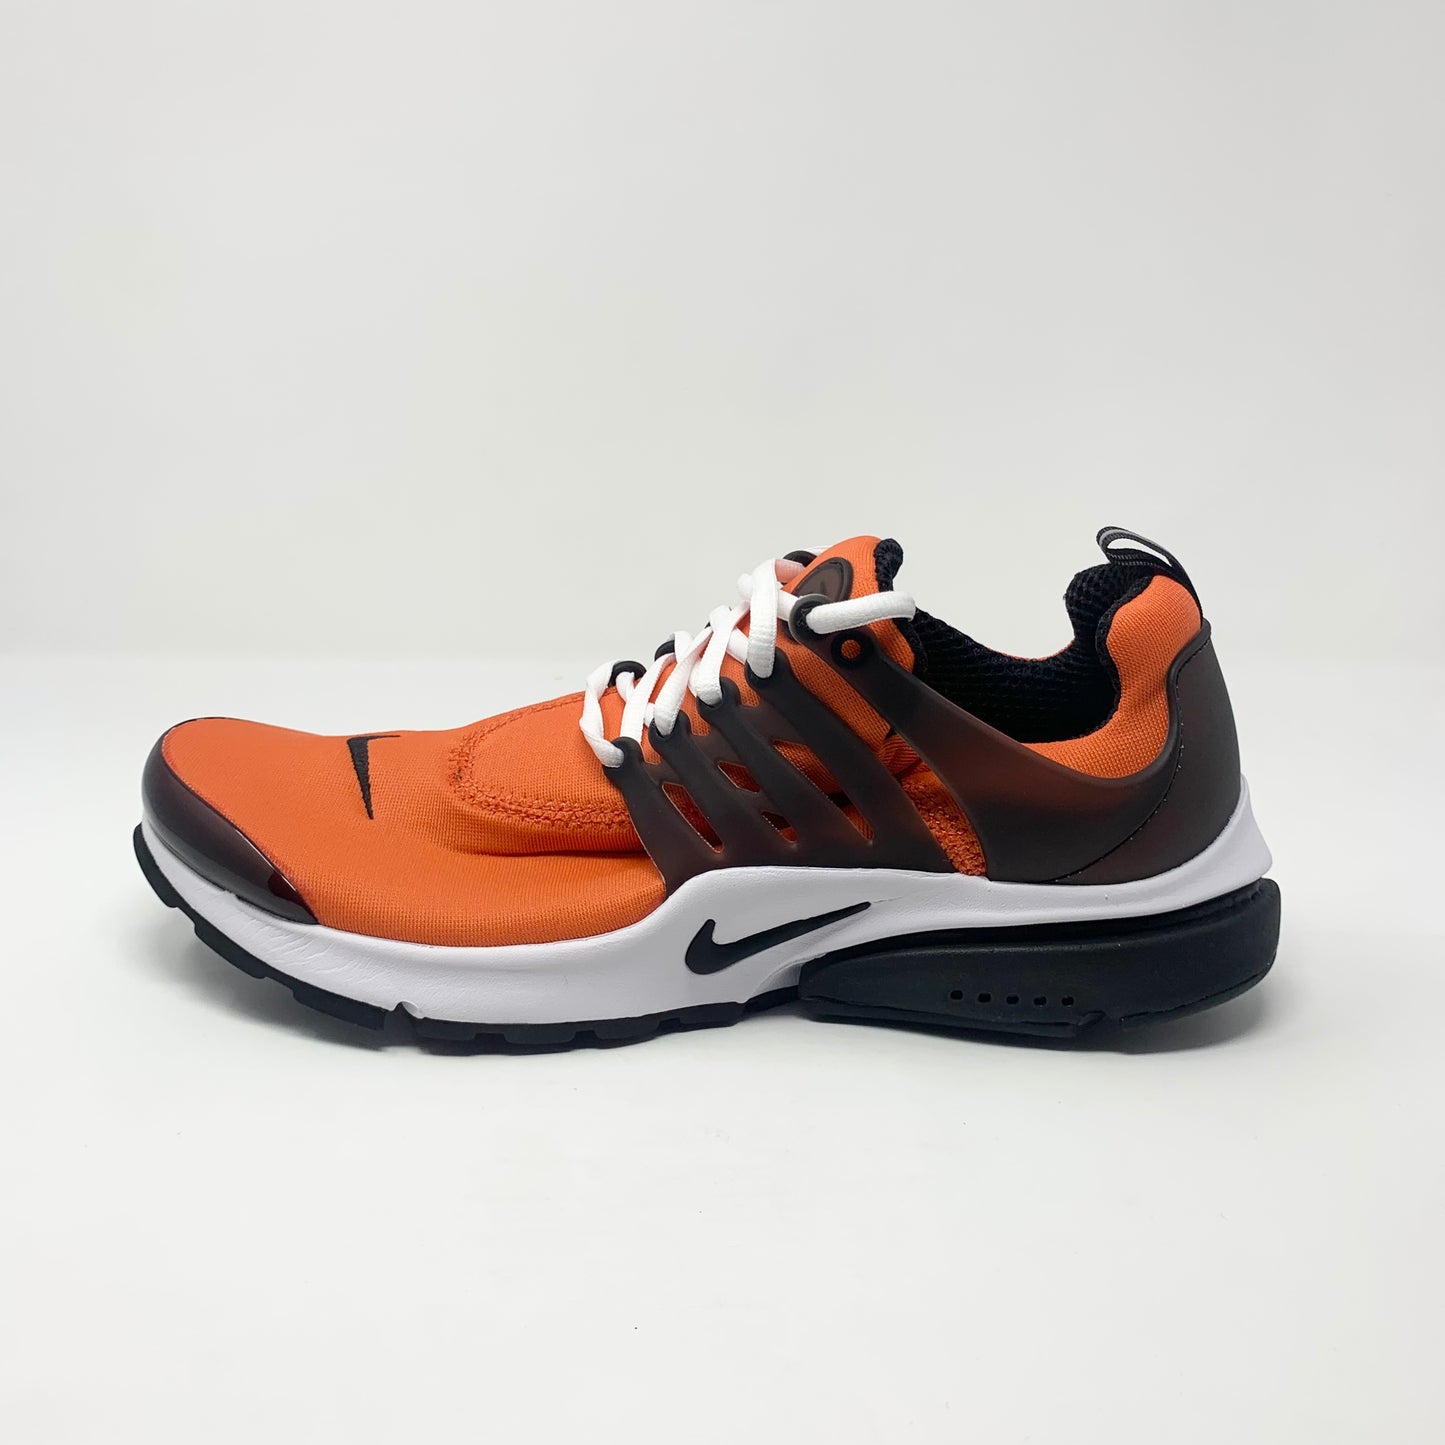 Nike Air Presto “Orange”